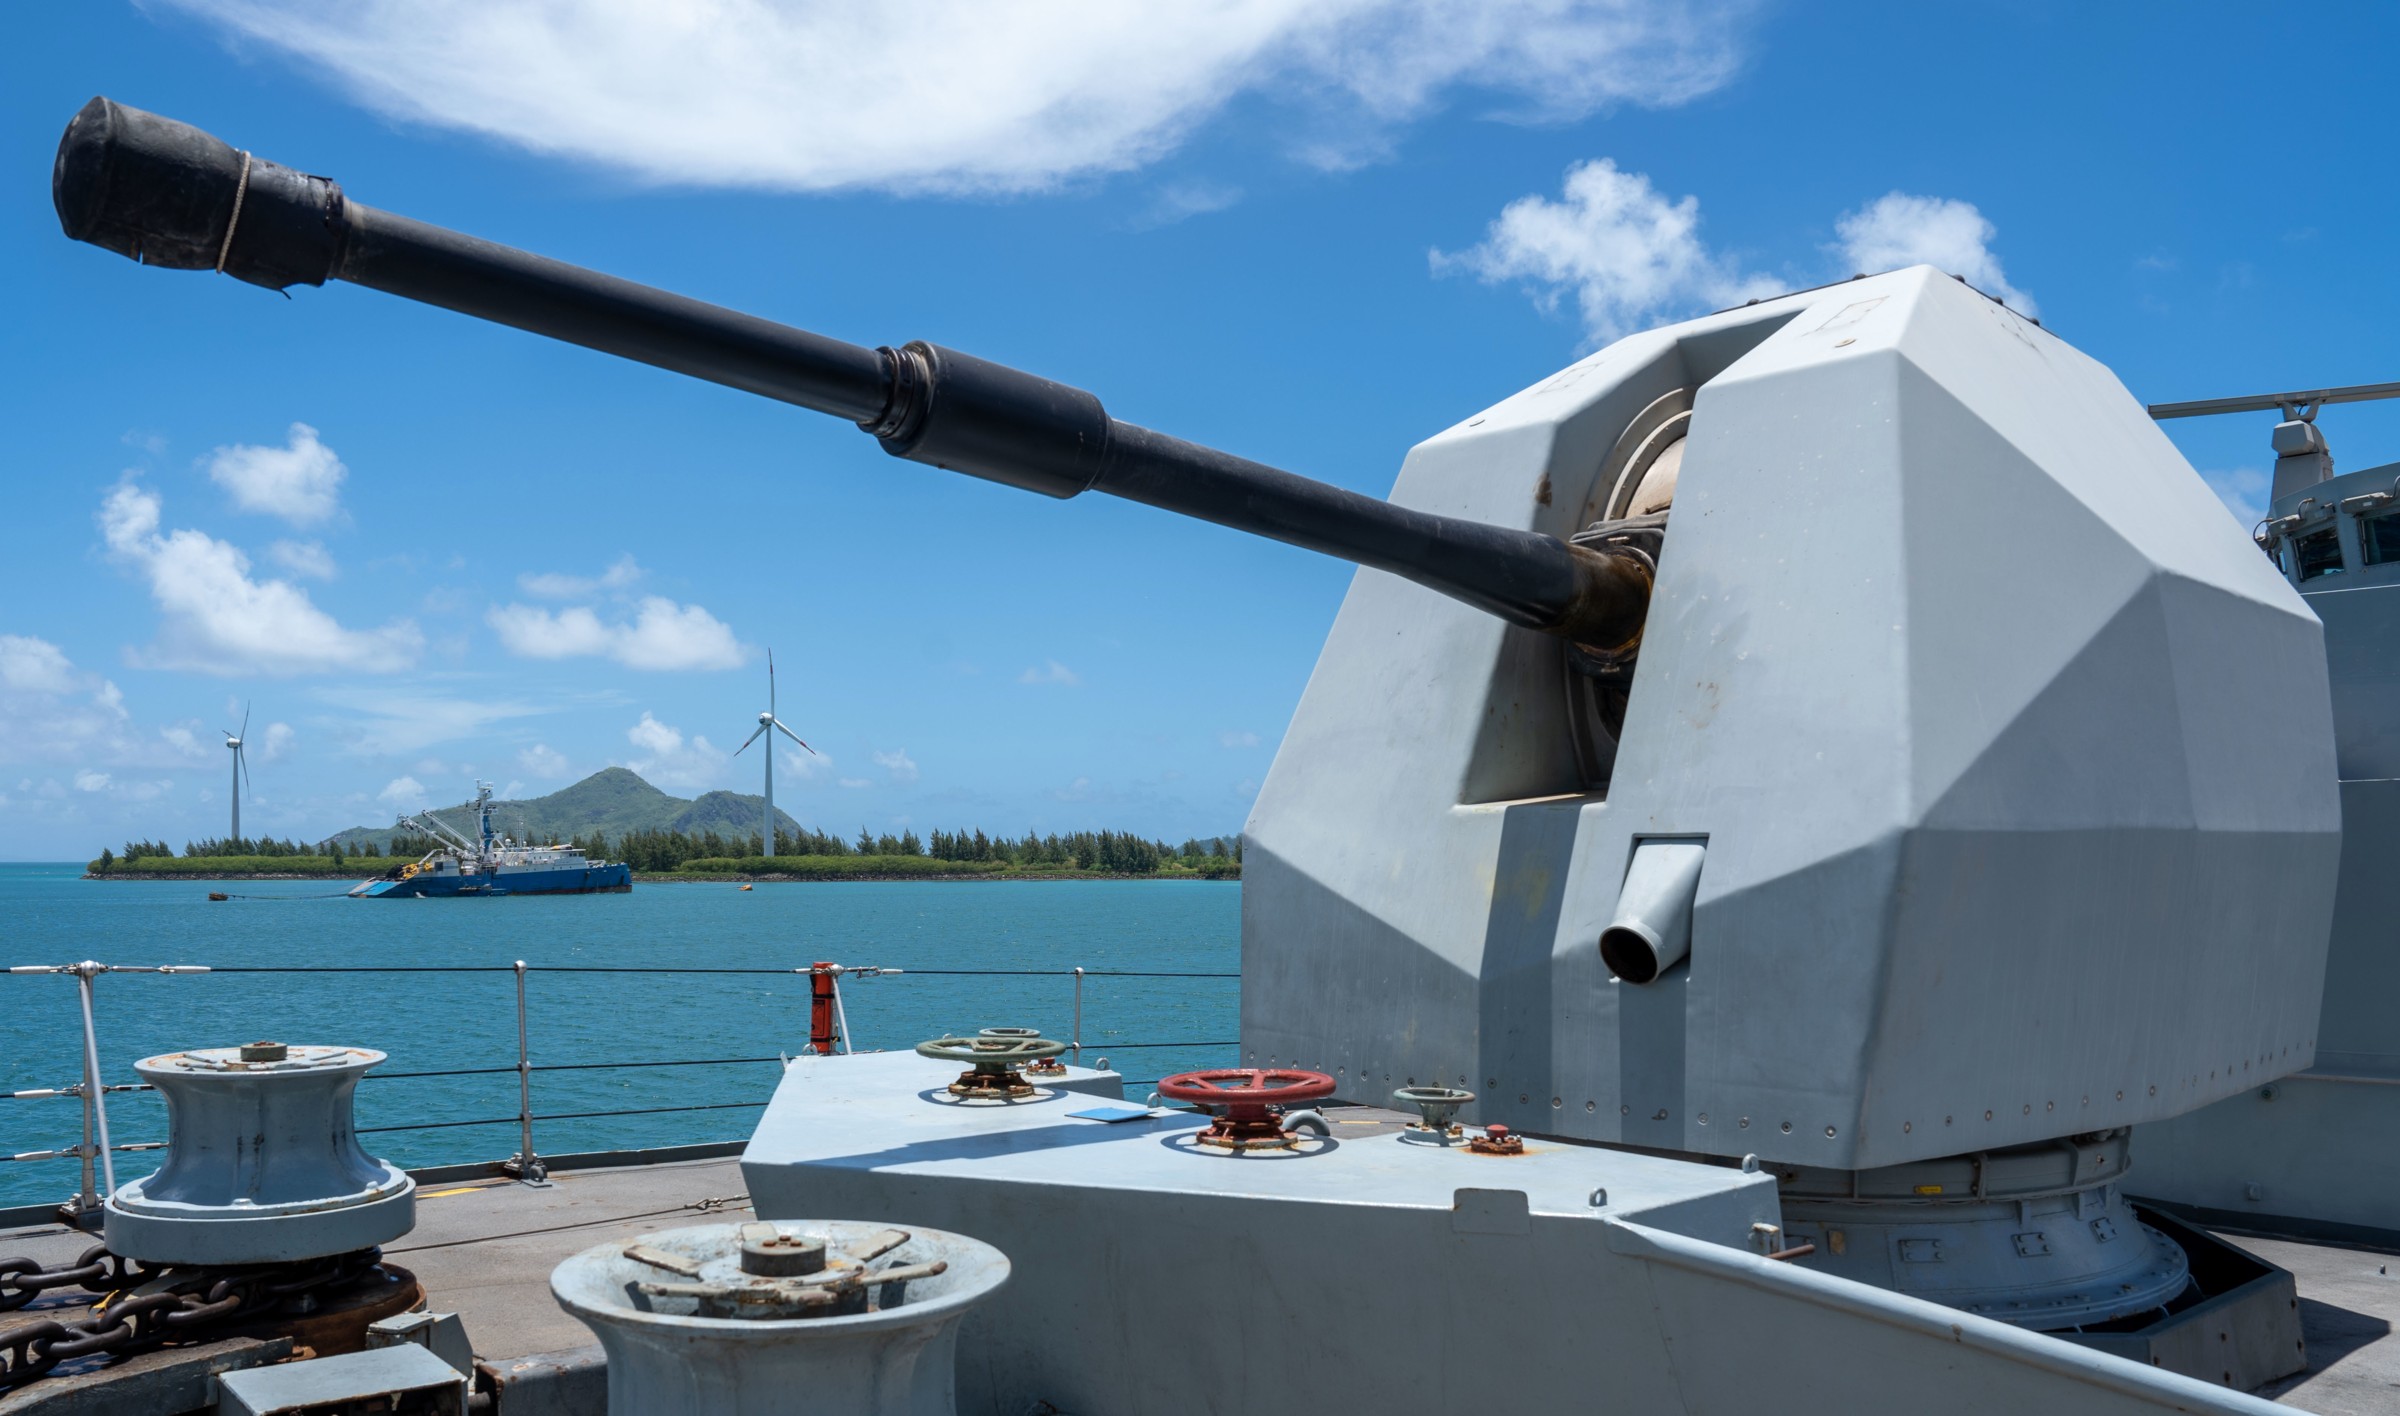 mark 8 mod.1 naval gun system 4.5 inches royal navy destroyer frigate 20x